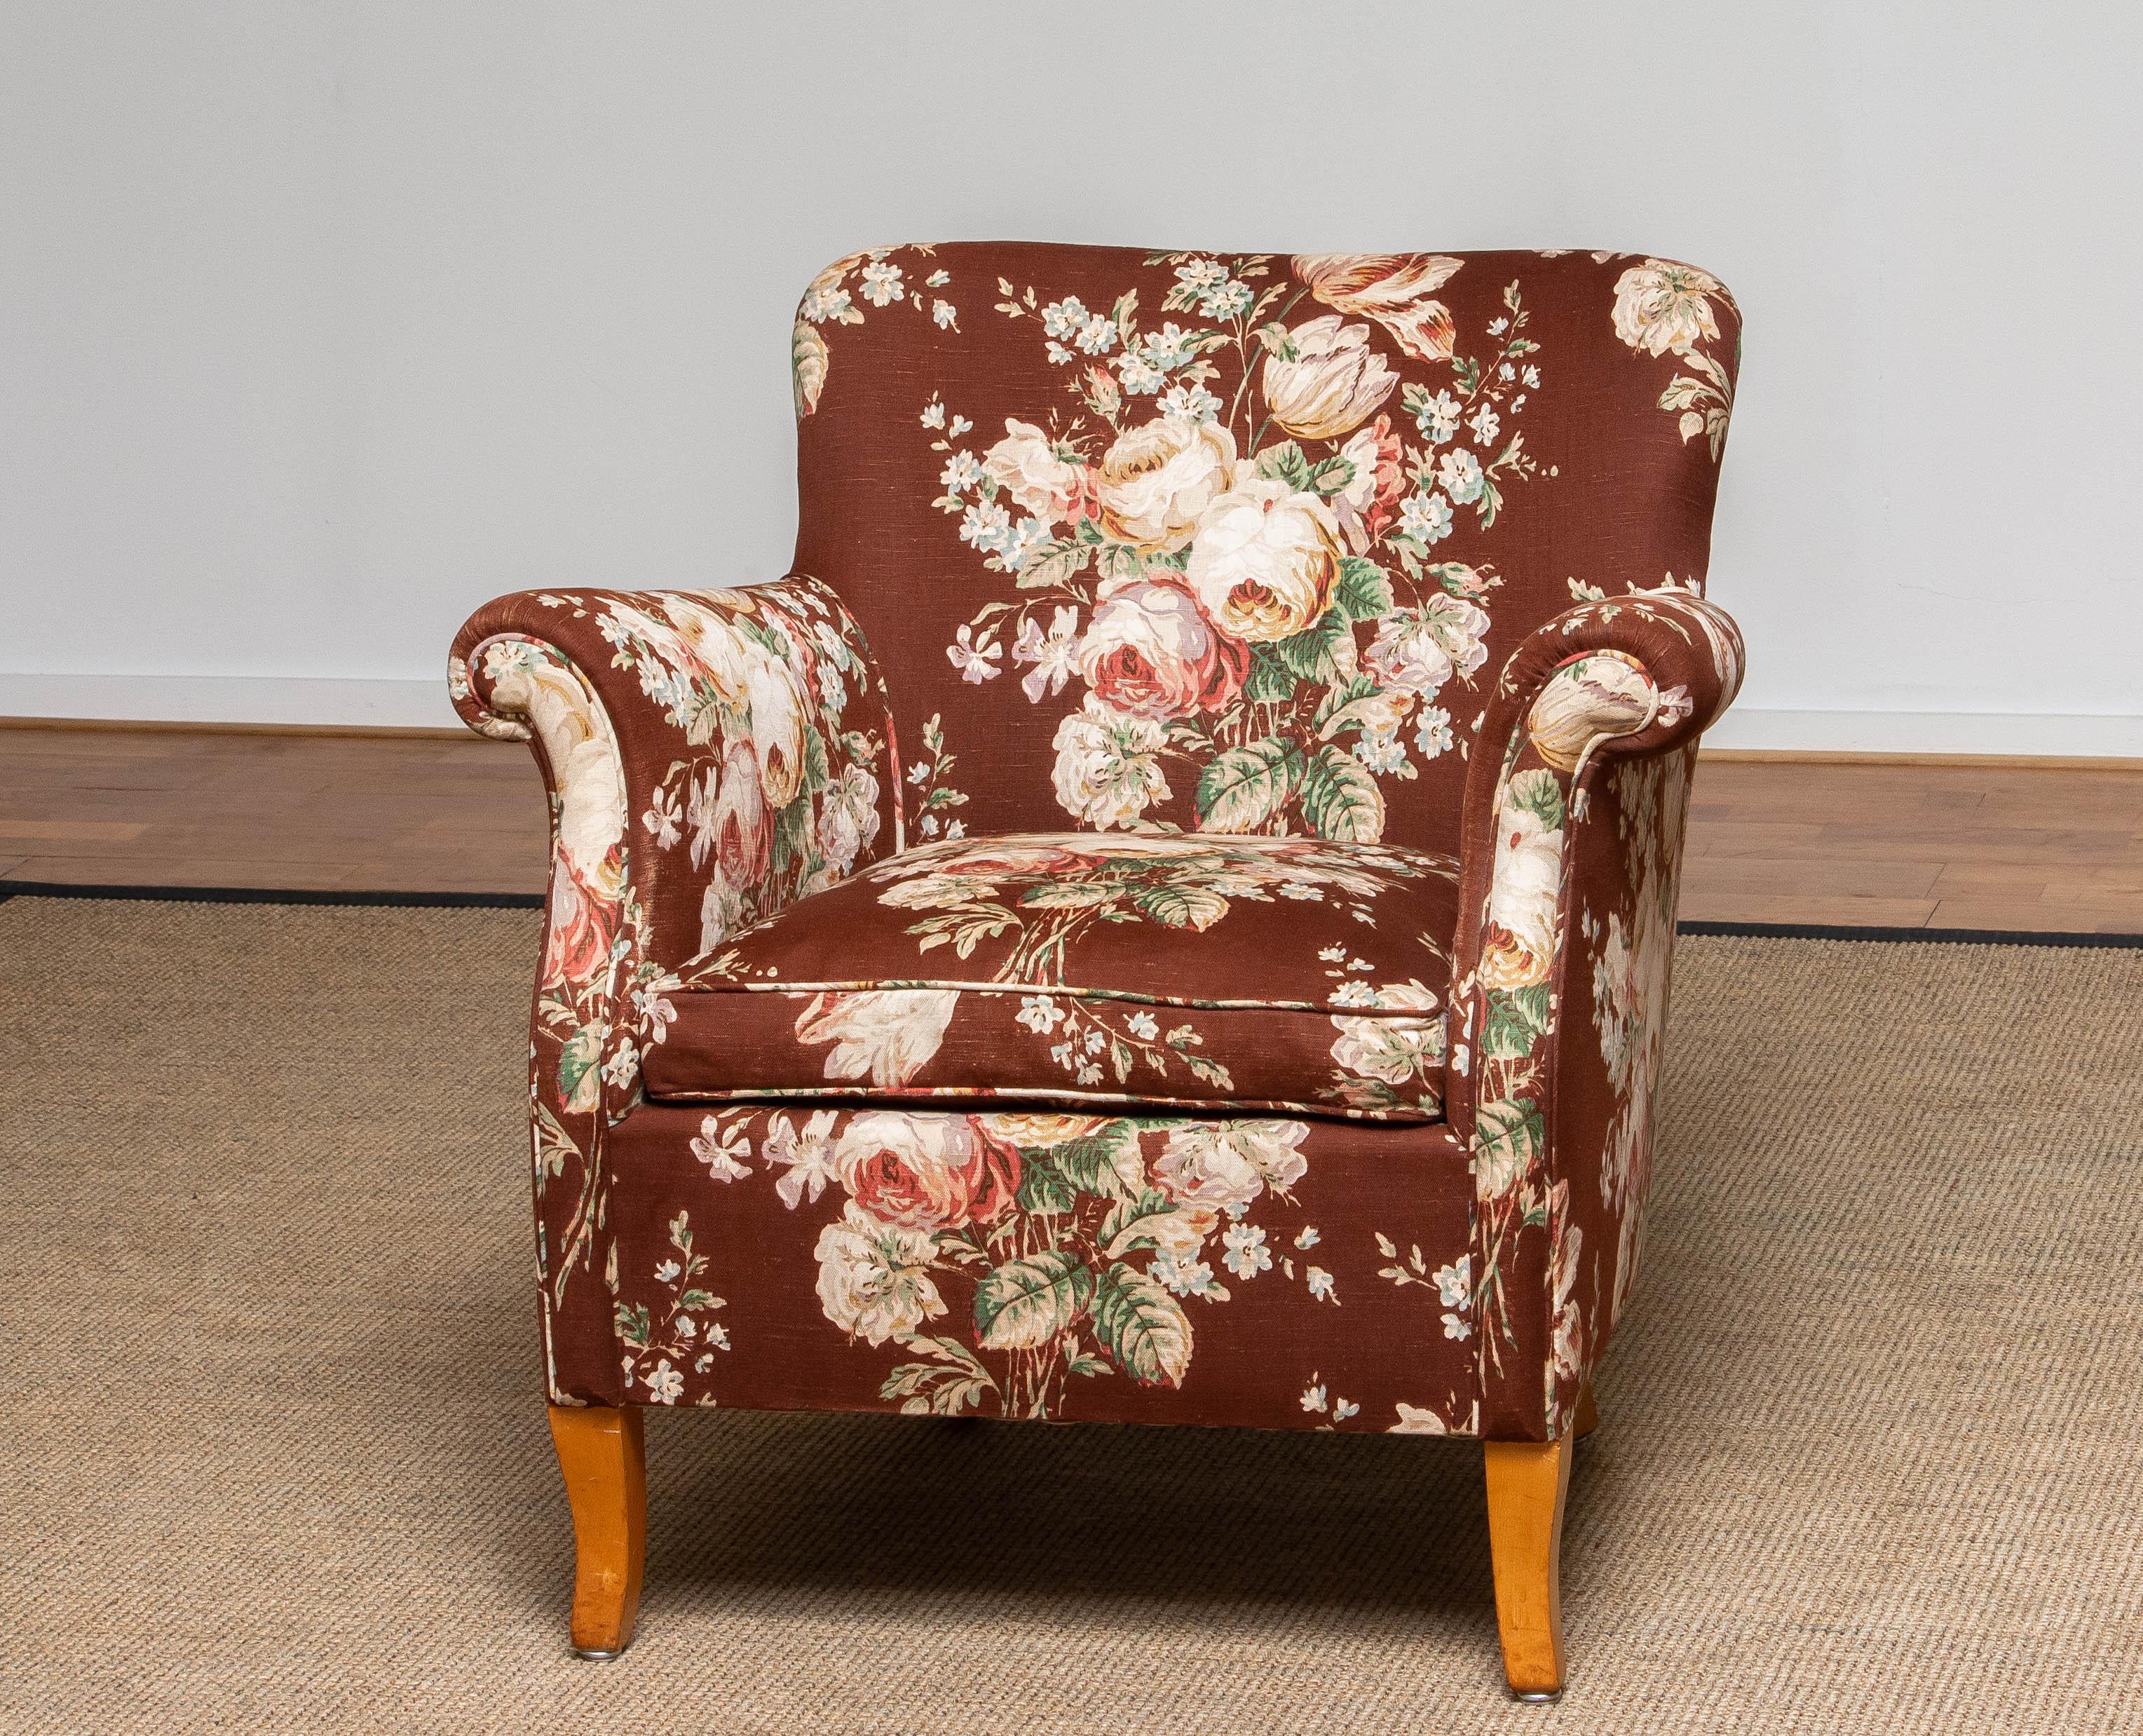 1950s Scandinavian Floral Printed Brown Linen Lounge / Easy Chair from Sweden In Good Condition In Silvolde, Gelderland